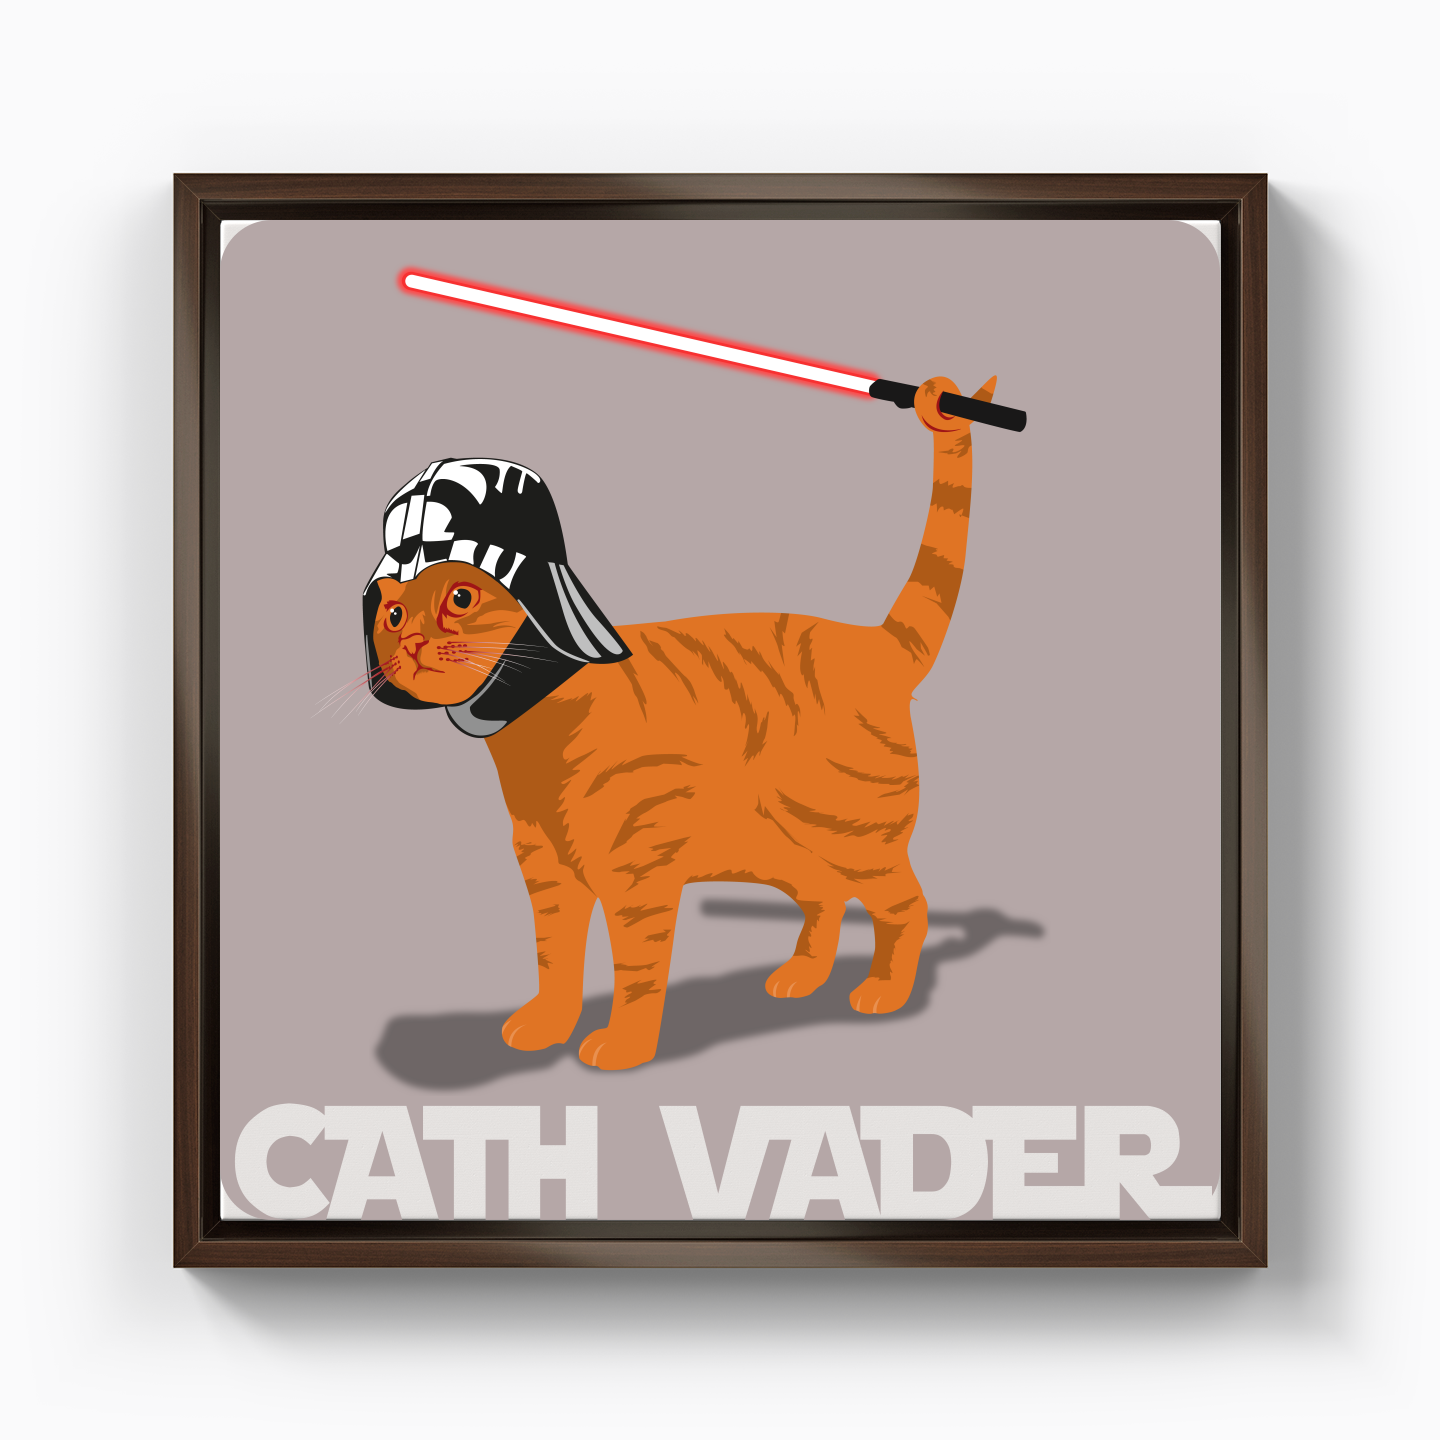 Cath Vader - Kanvas Tablo